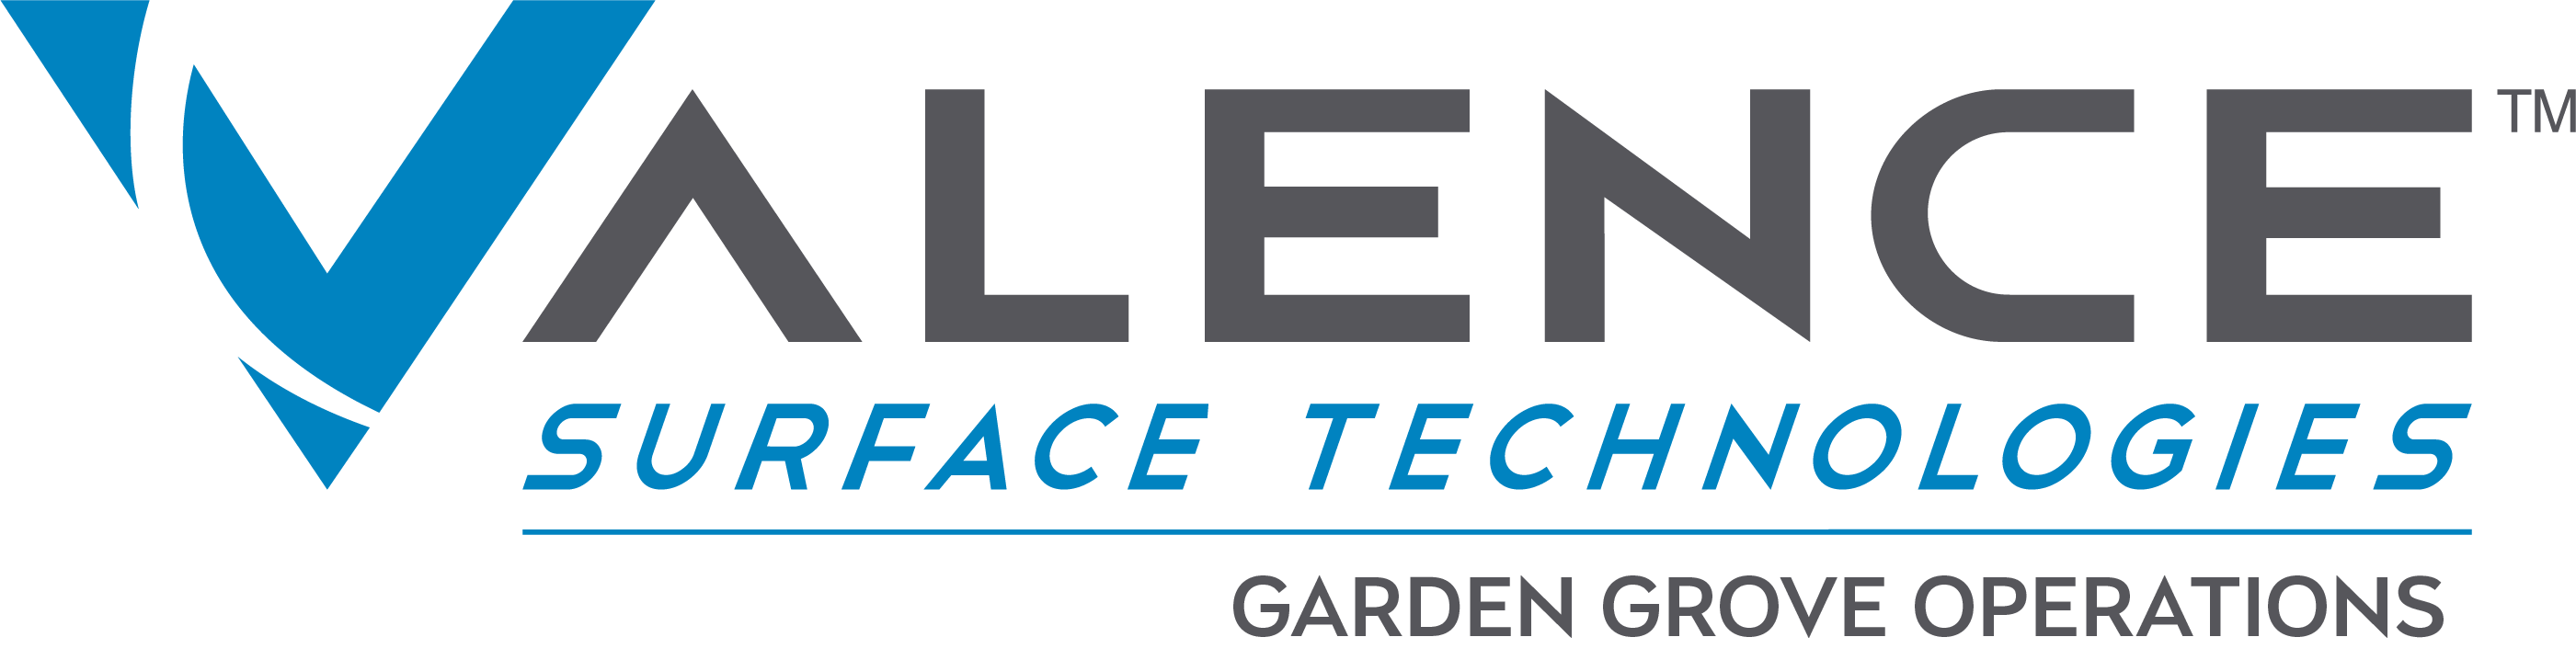 Valence Surface Technologies Garden Grove Operations logo